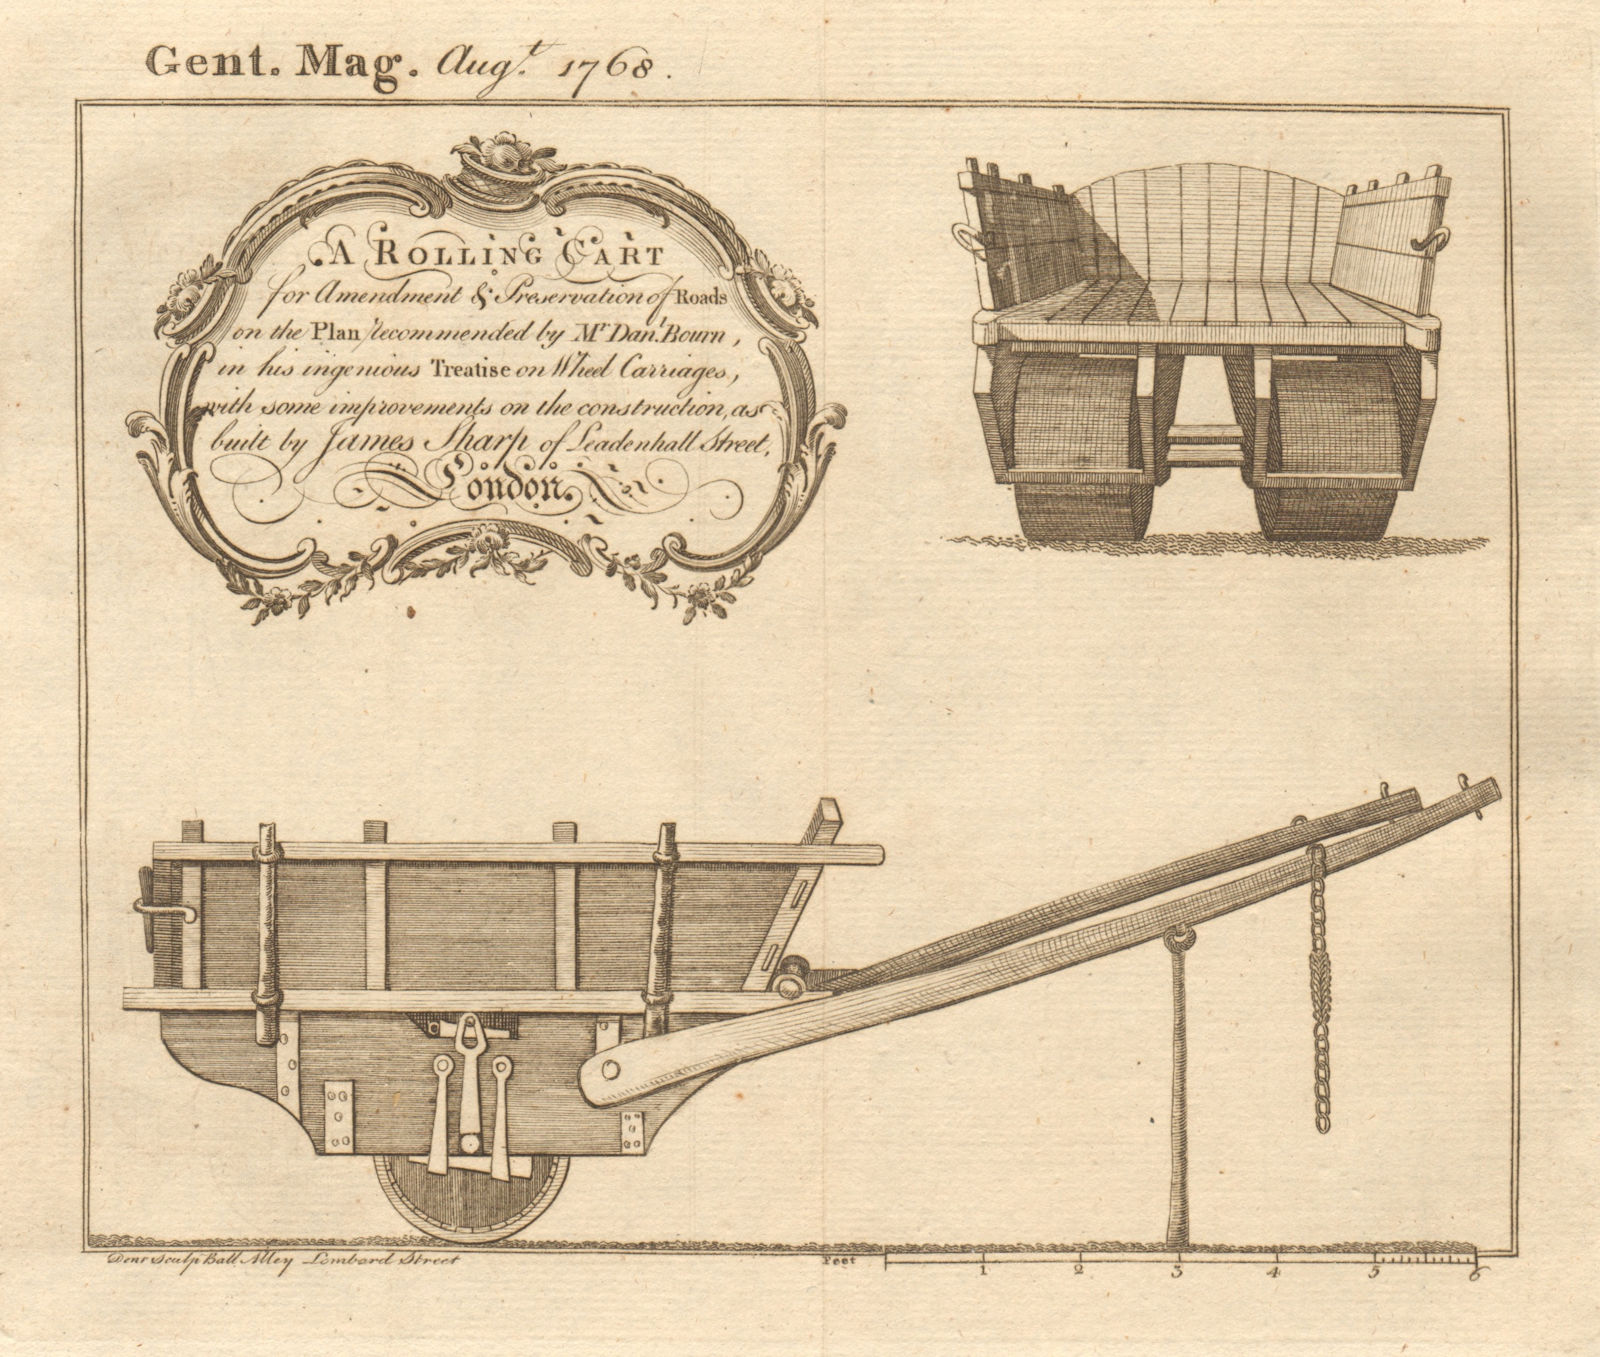 Associate Product Rolling cart for road maintenance. Design Daniel Bourn. Built James Sharp 1768